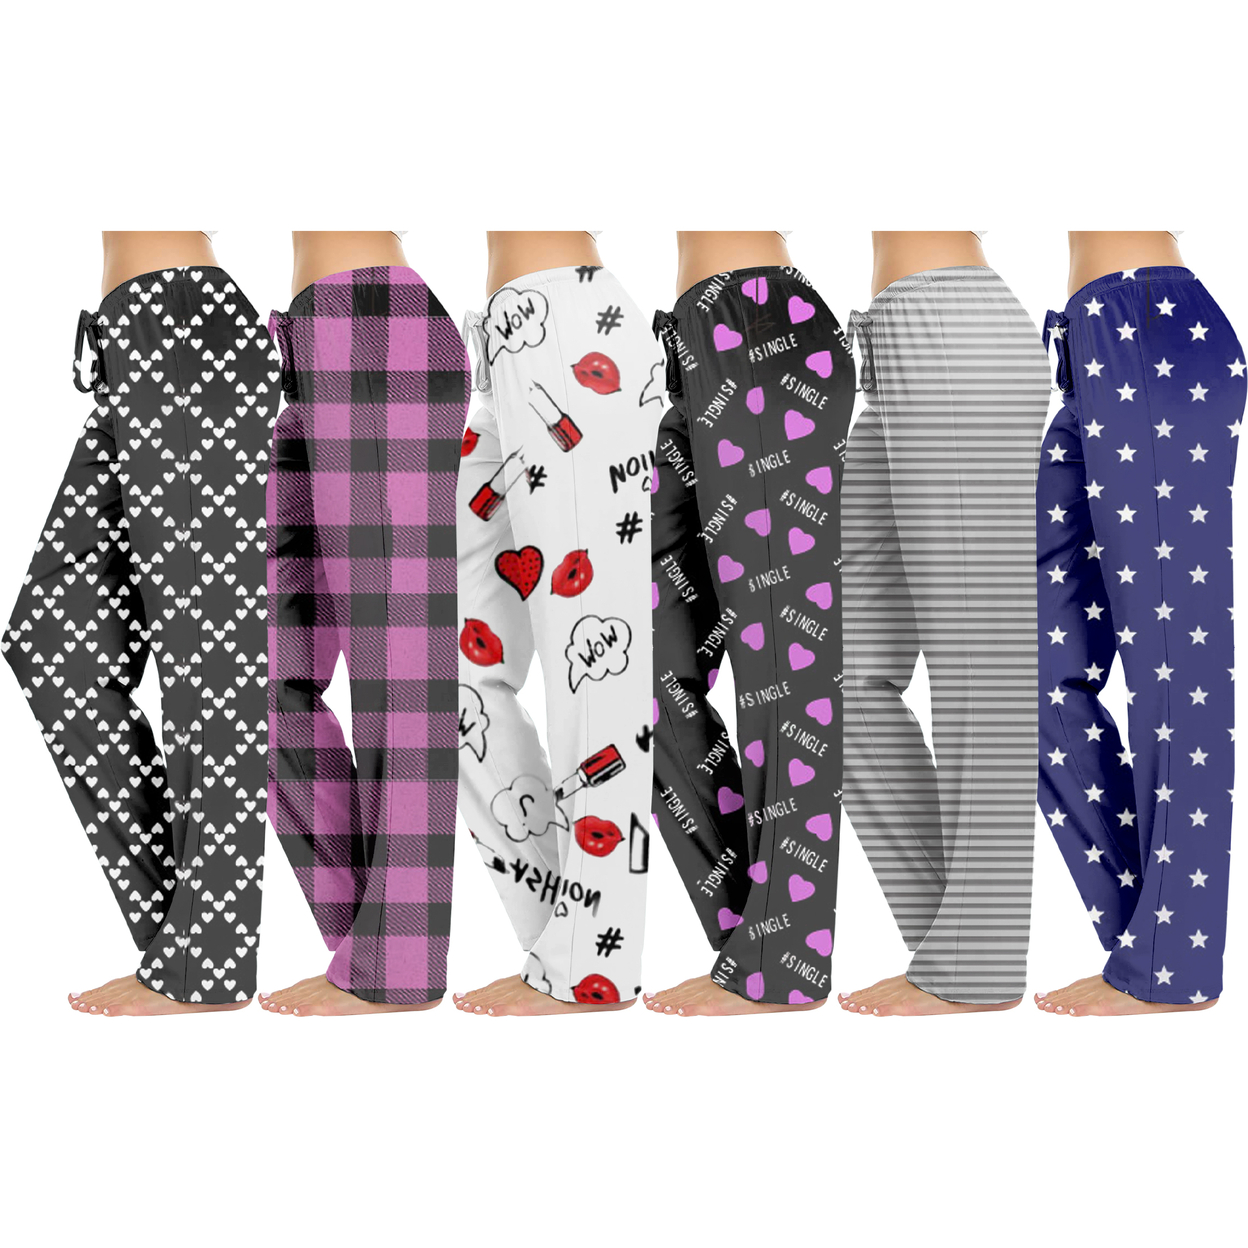 2-Pack: Women's Casual Fun Printed Lightweight Lounge Terry Knit Pajama Bottom Pants - Large, Animal